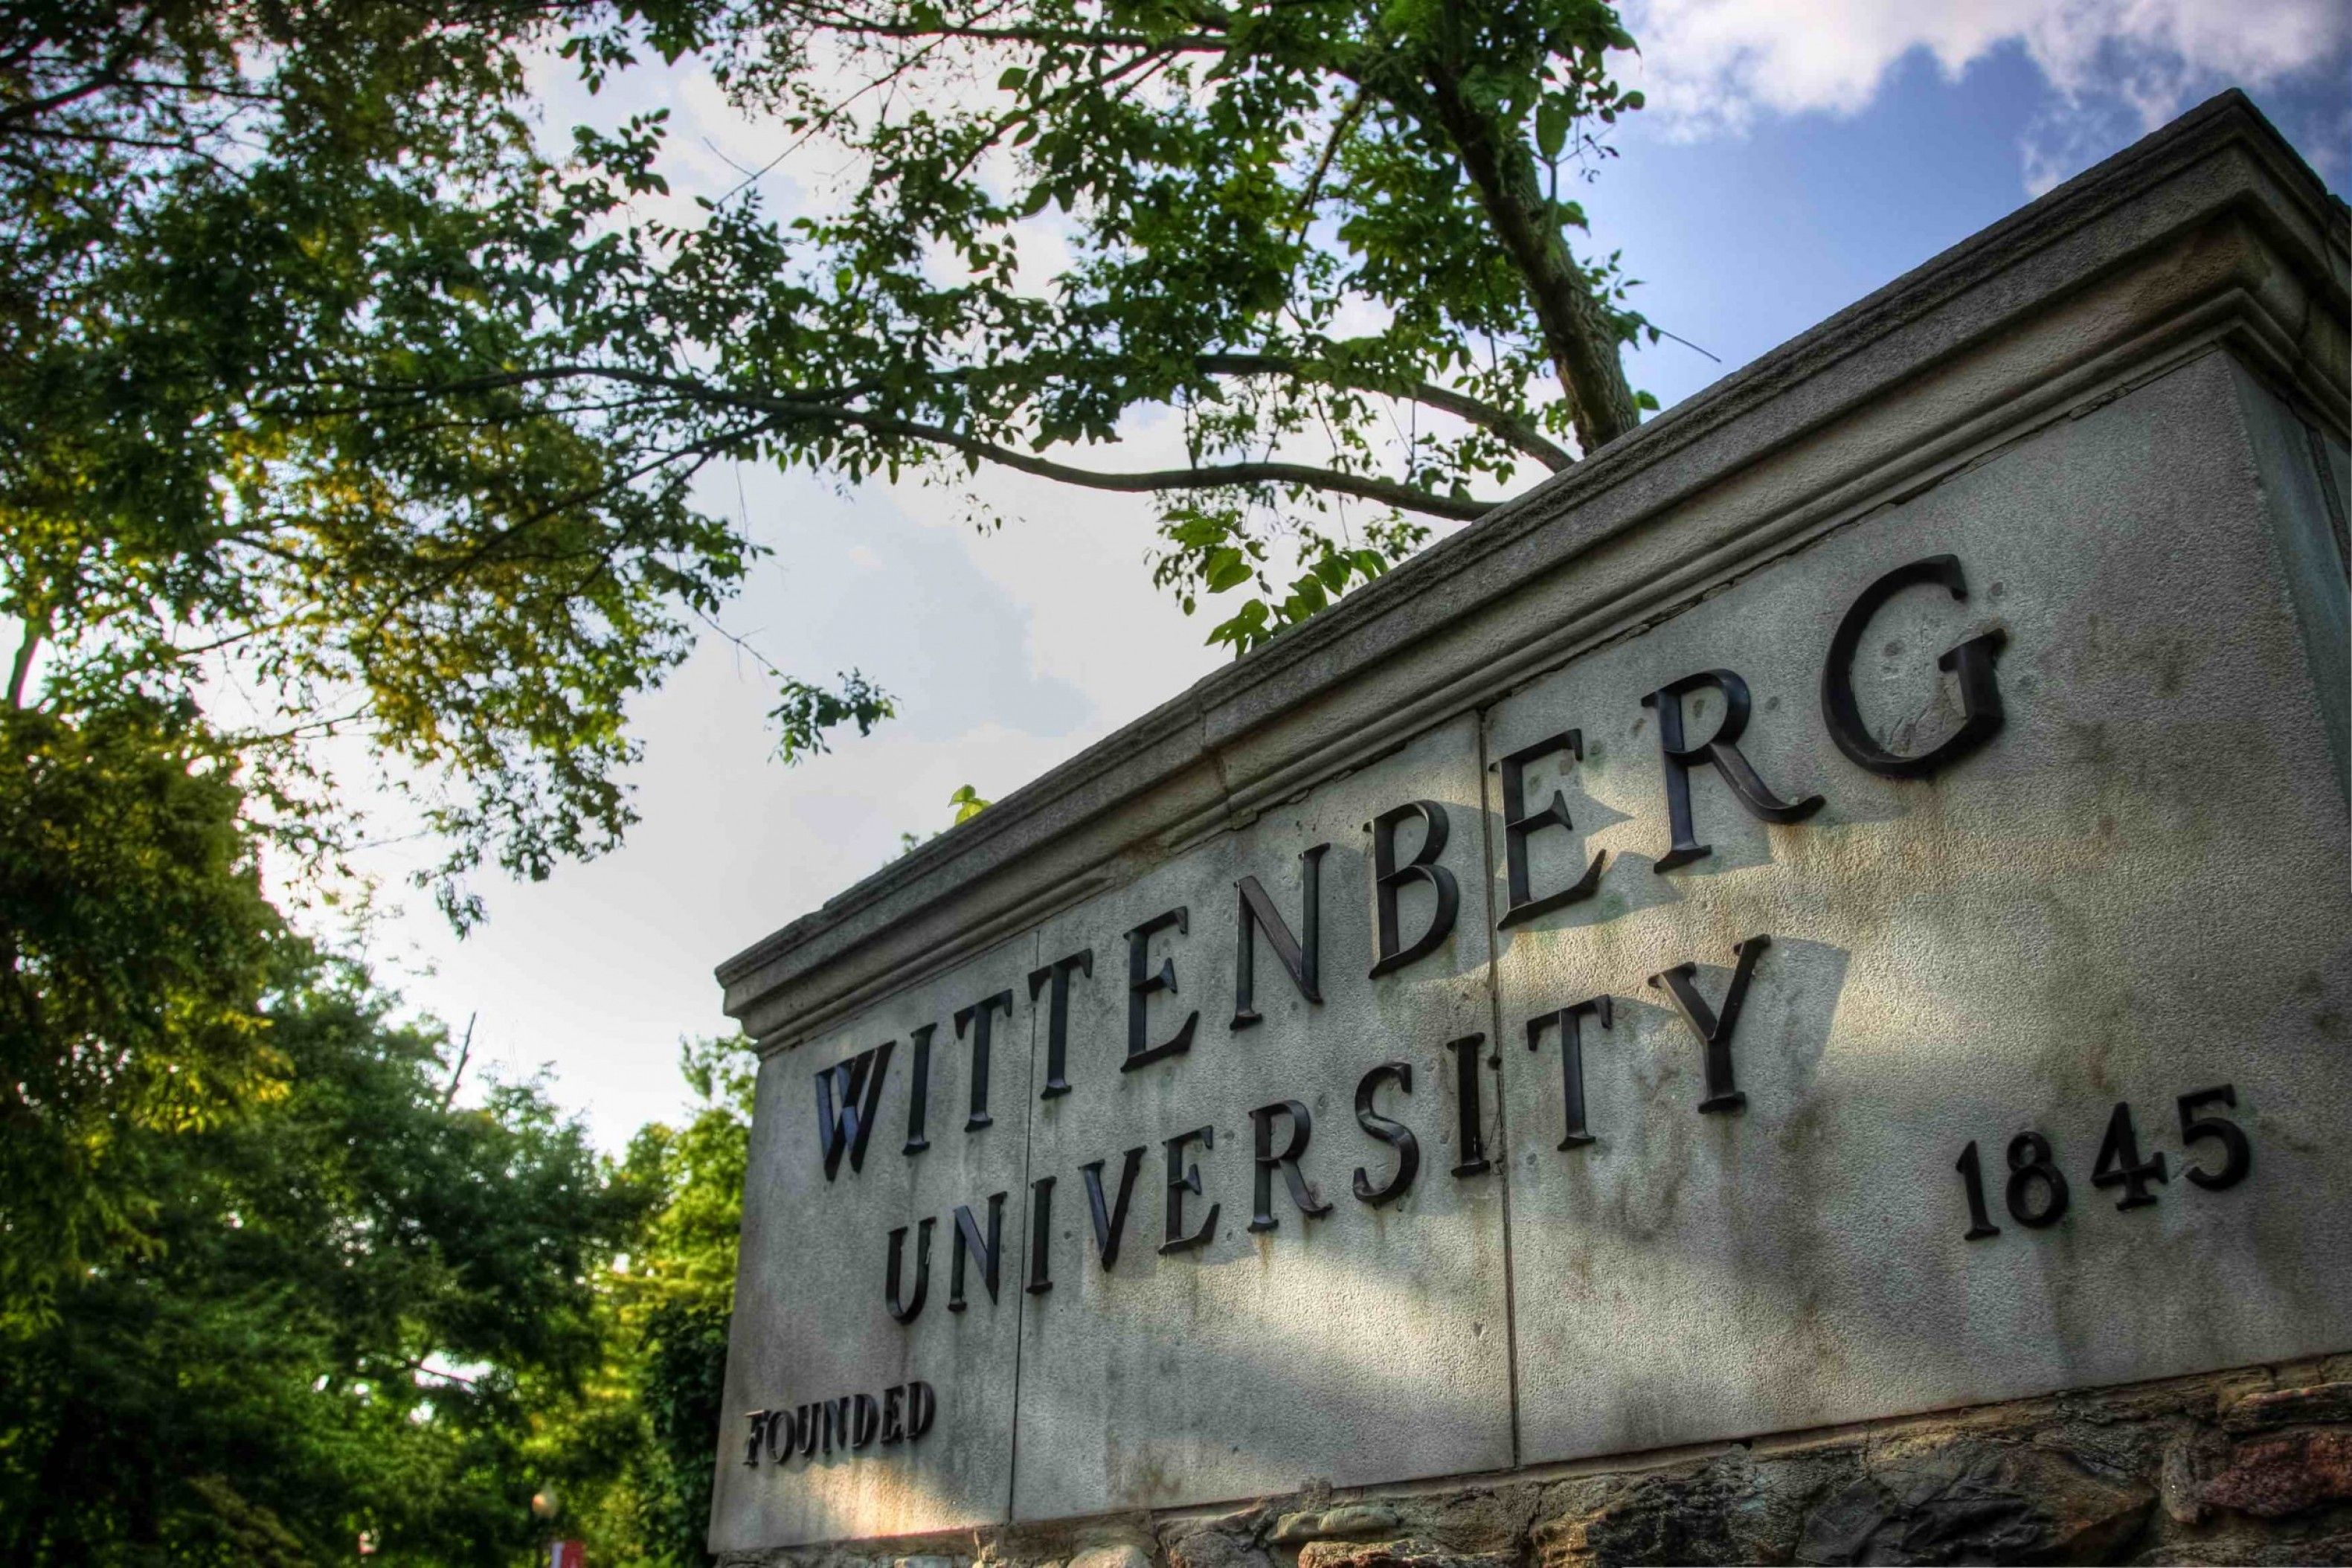 New Advancement Leader Wittenberg University